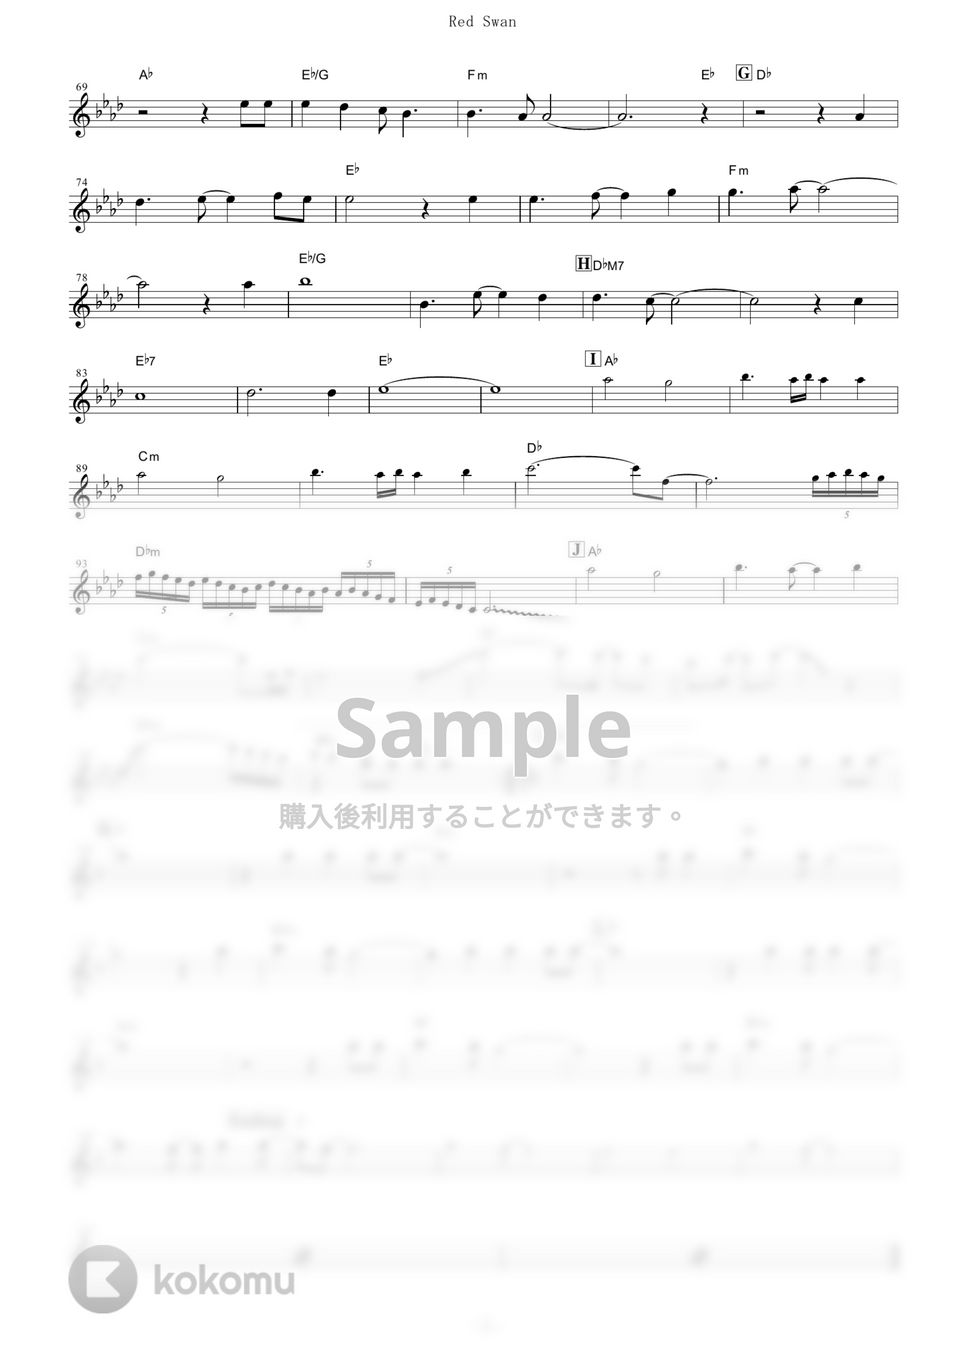 YOSHIKI feat. HYDE - Red Swan (『進撃の巨人』 / in C) by muta-sax